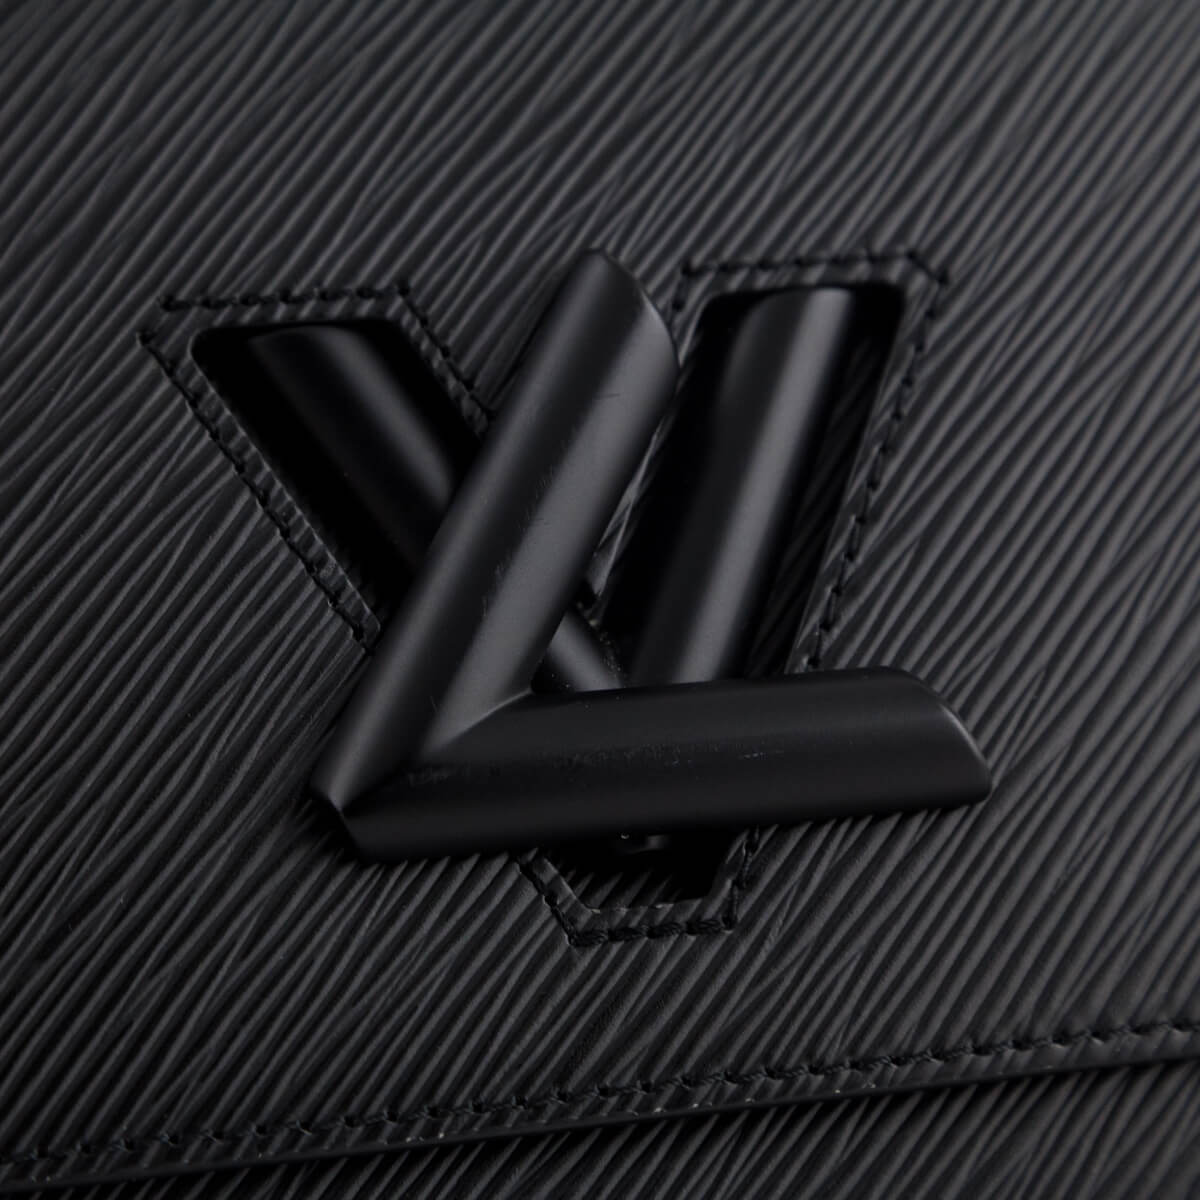 Louis Vuitton Twist MM Black - Verchka